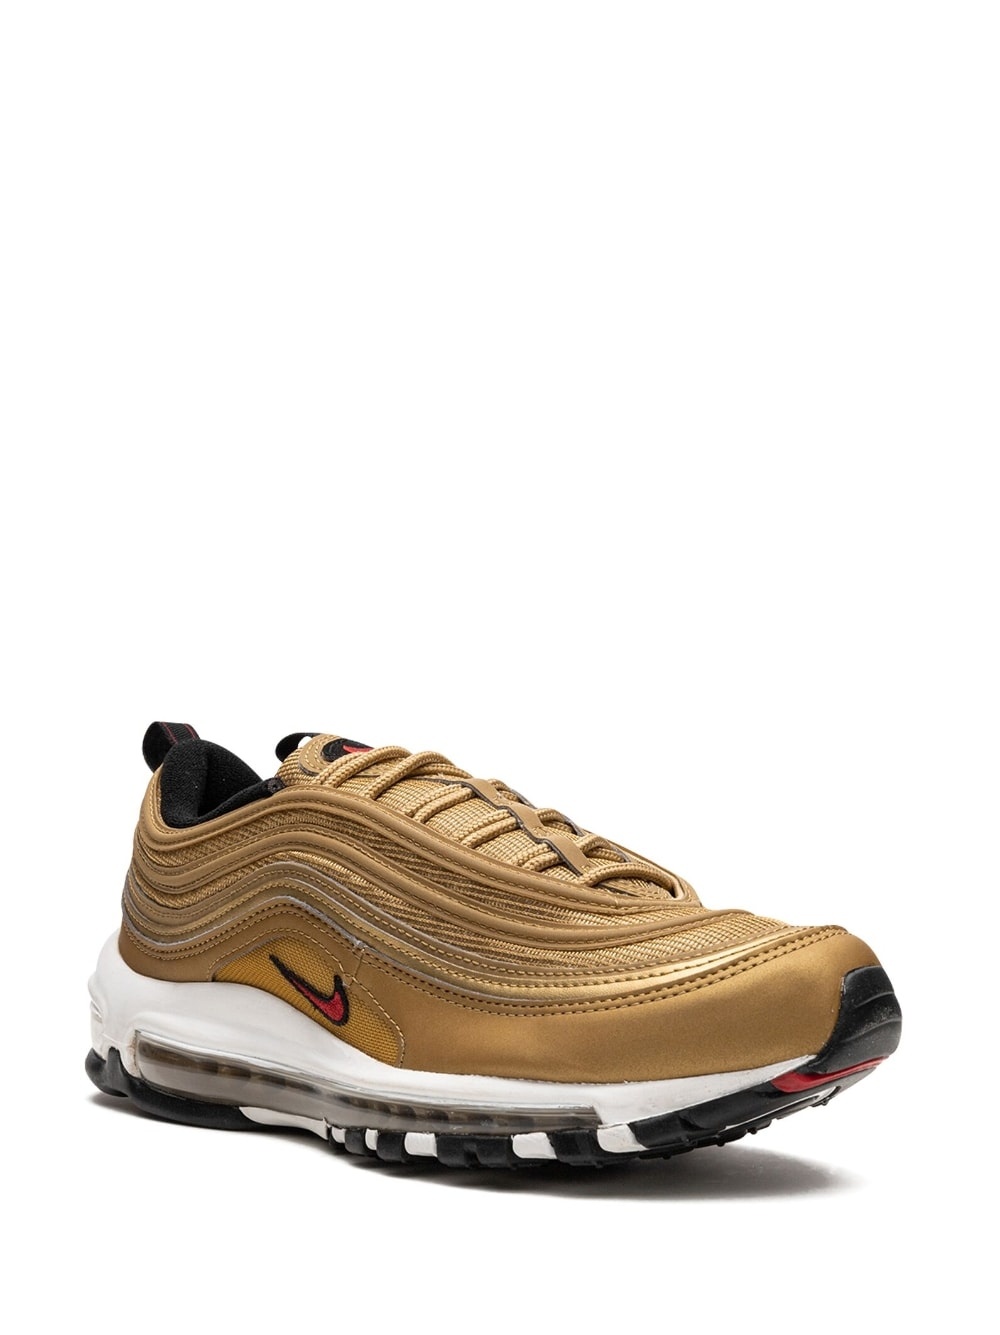 Air Max 97 OG "Gold Bullet" sneakers - 2